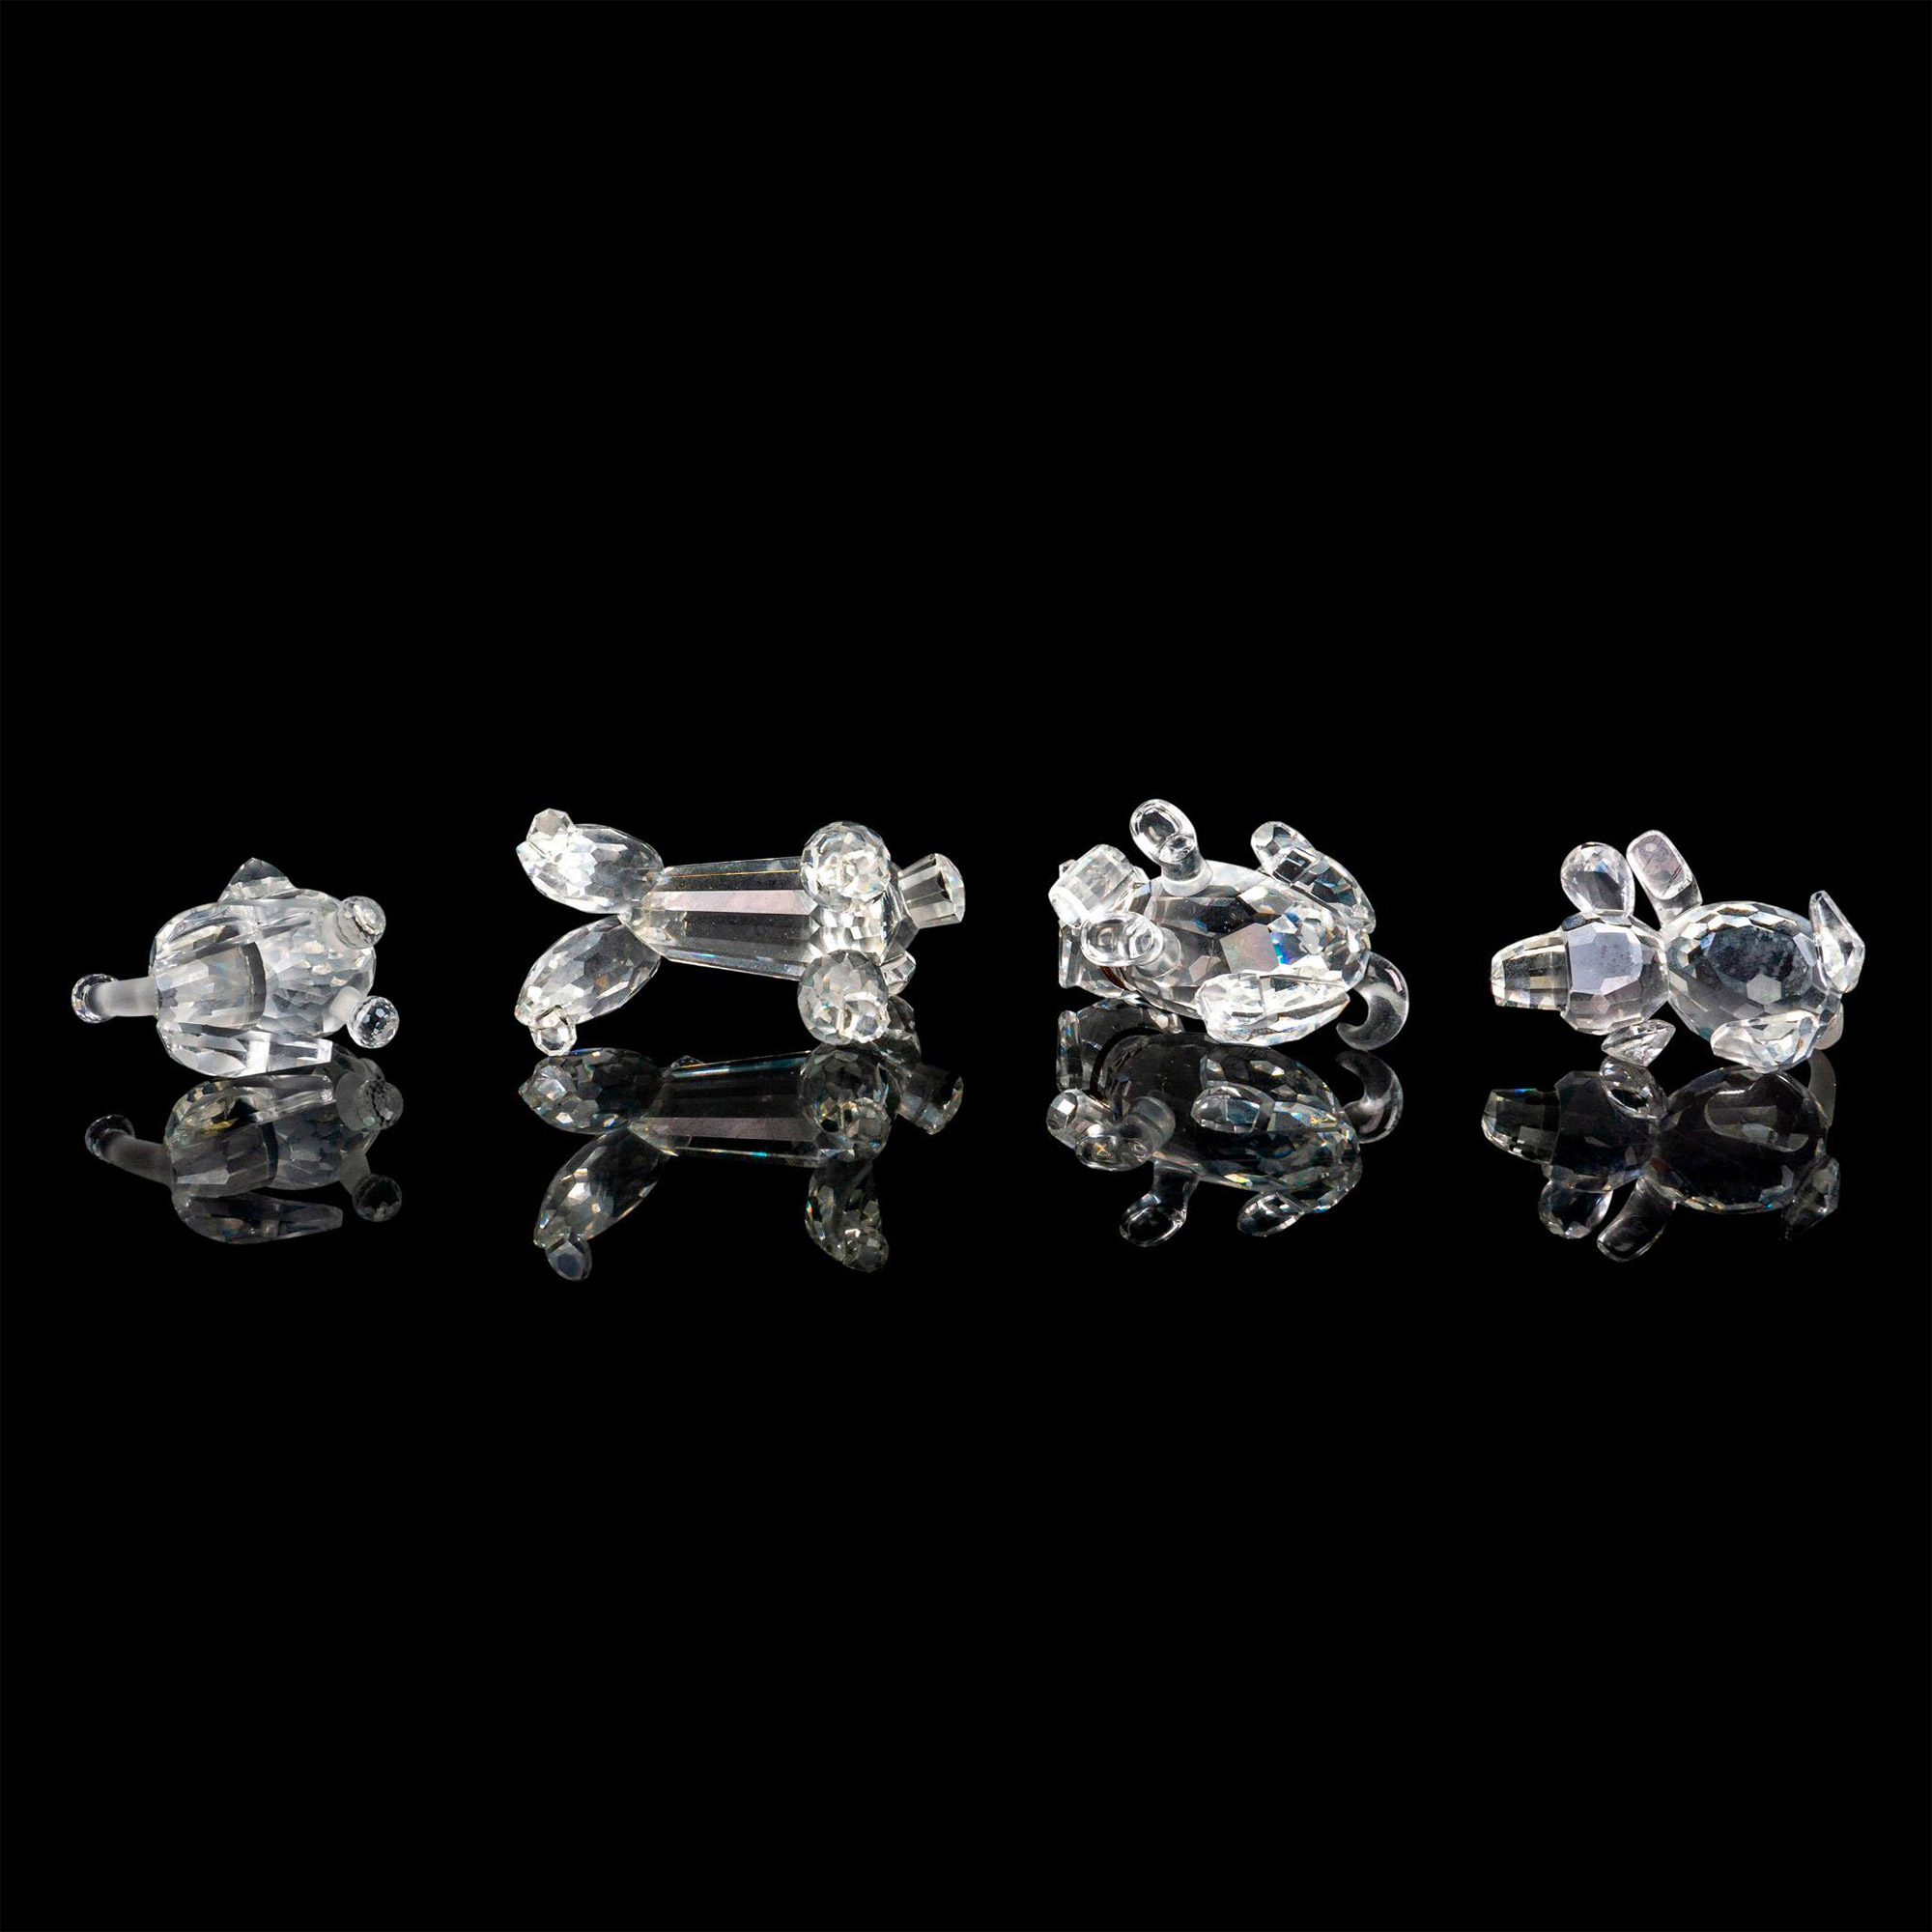 4pc Swarovski Crystal Figurines - Image 3 of 3